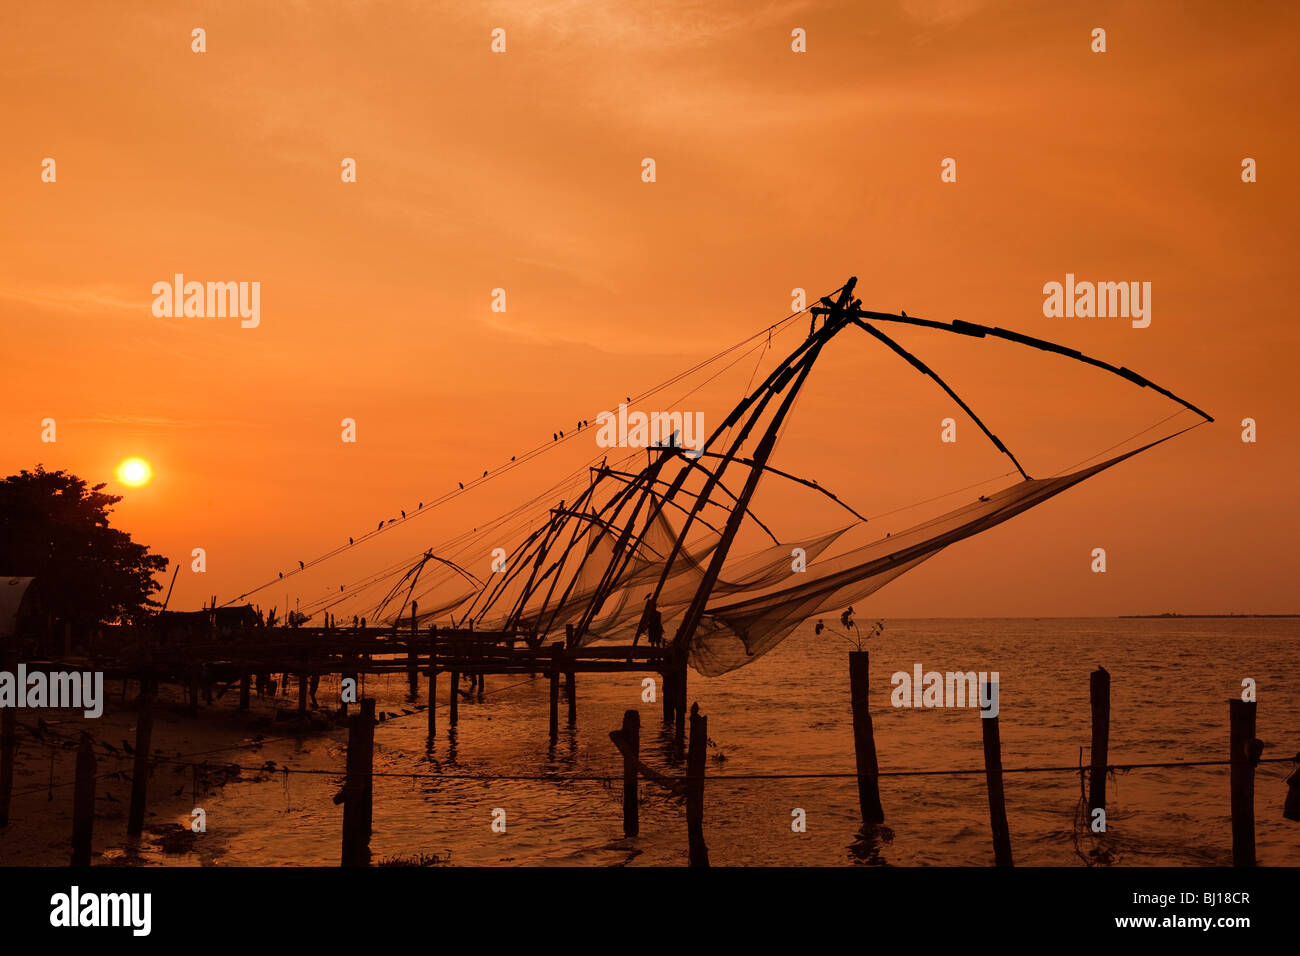 Indien, Kerala, Kochi, Fort Cochin, Strandpromenade, Chinesische Fischernetze bei Sonnenuntergang Stockfoto